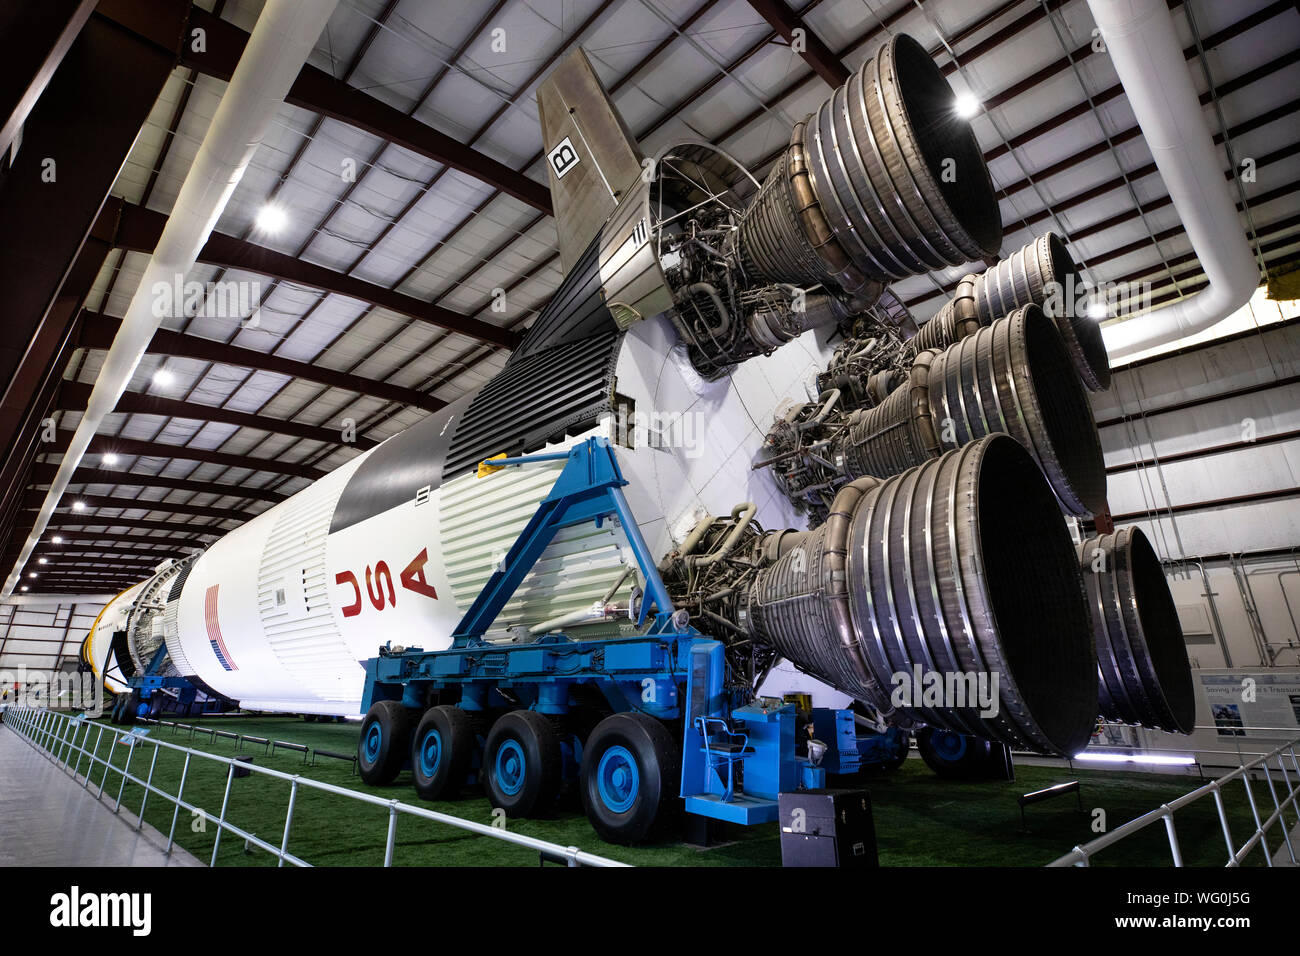 Saturn V rocket at NASA Johnson Space Center, Houston, Texas Stock Photo